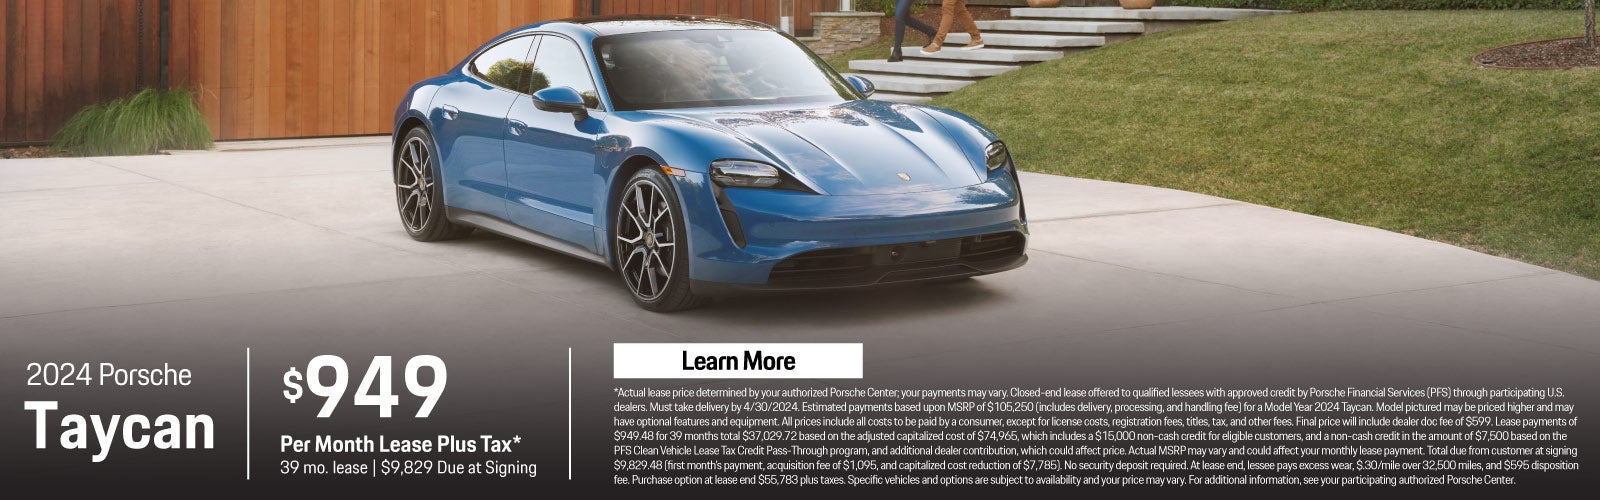 2024 Porsche Taycan - $949 Per Month - Learn More